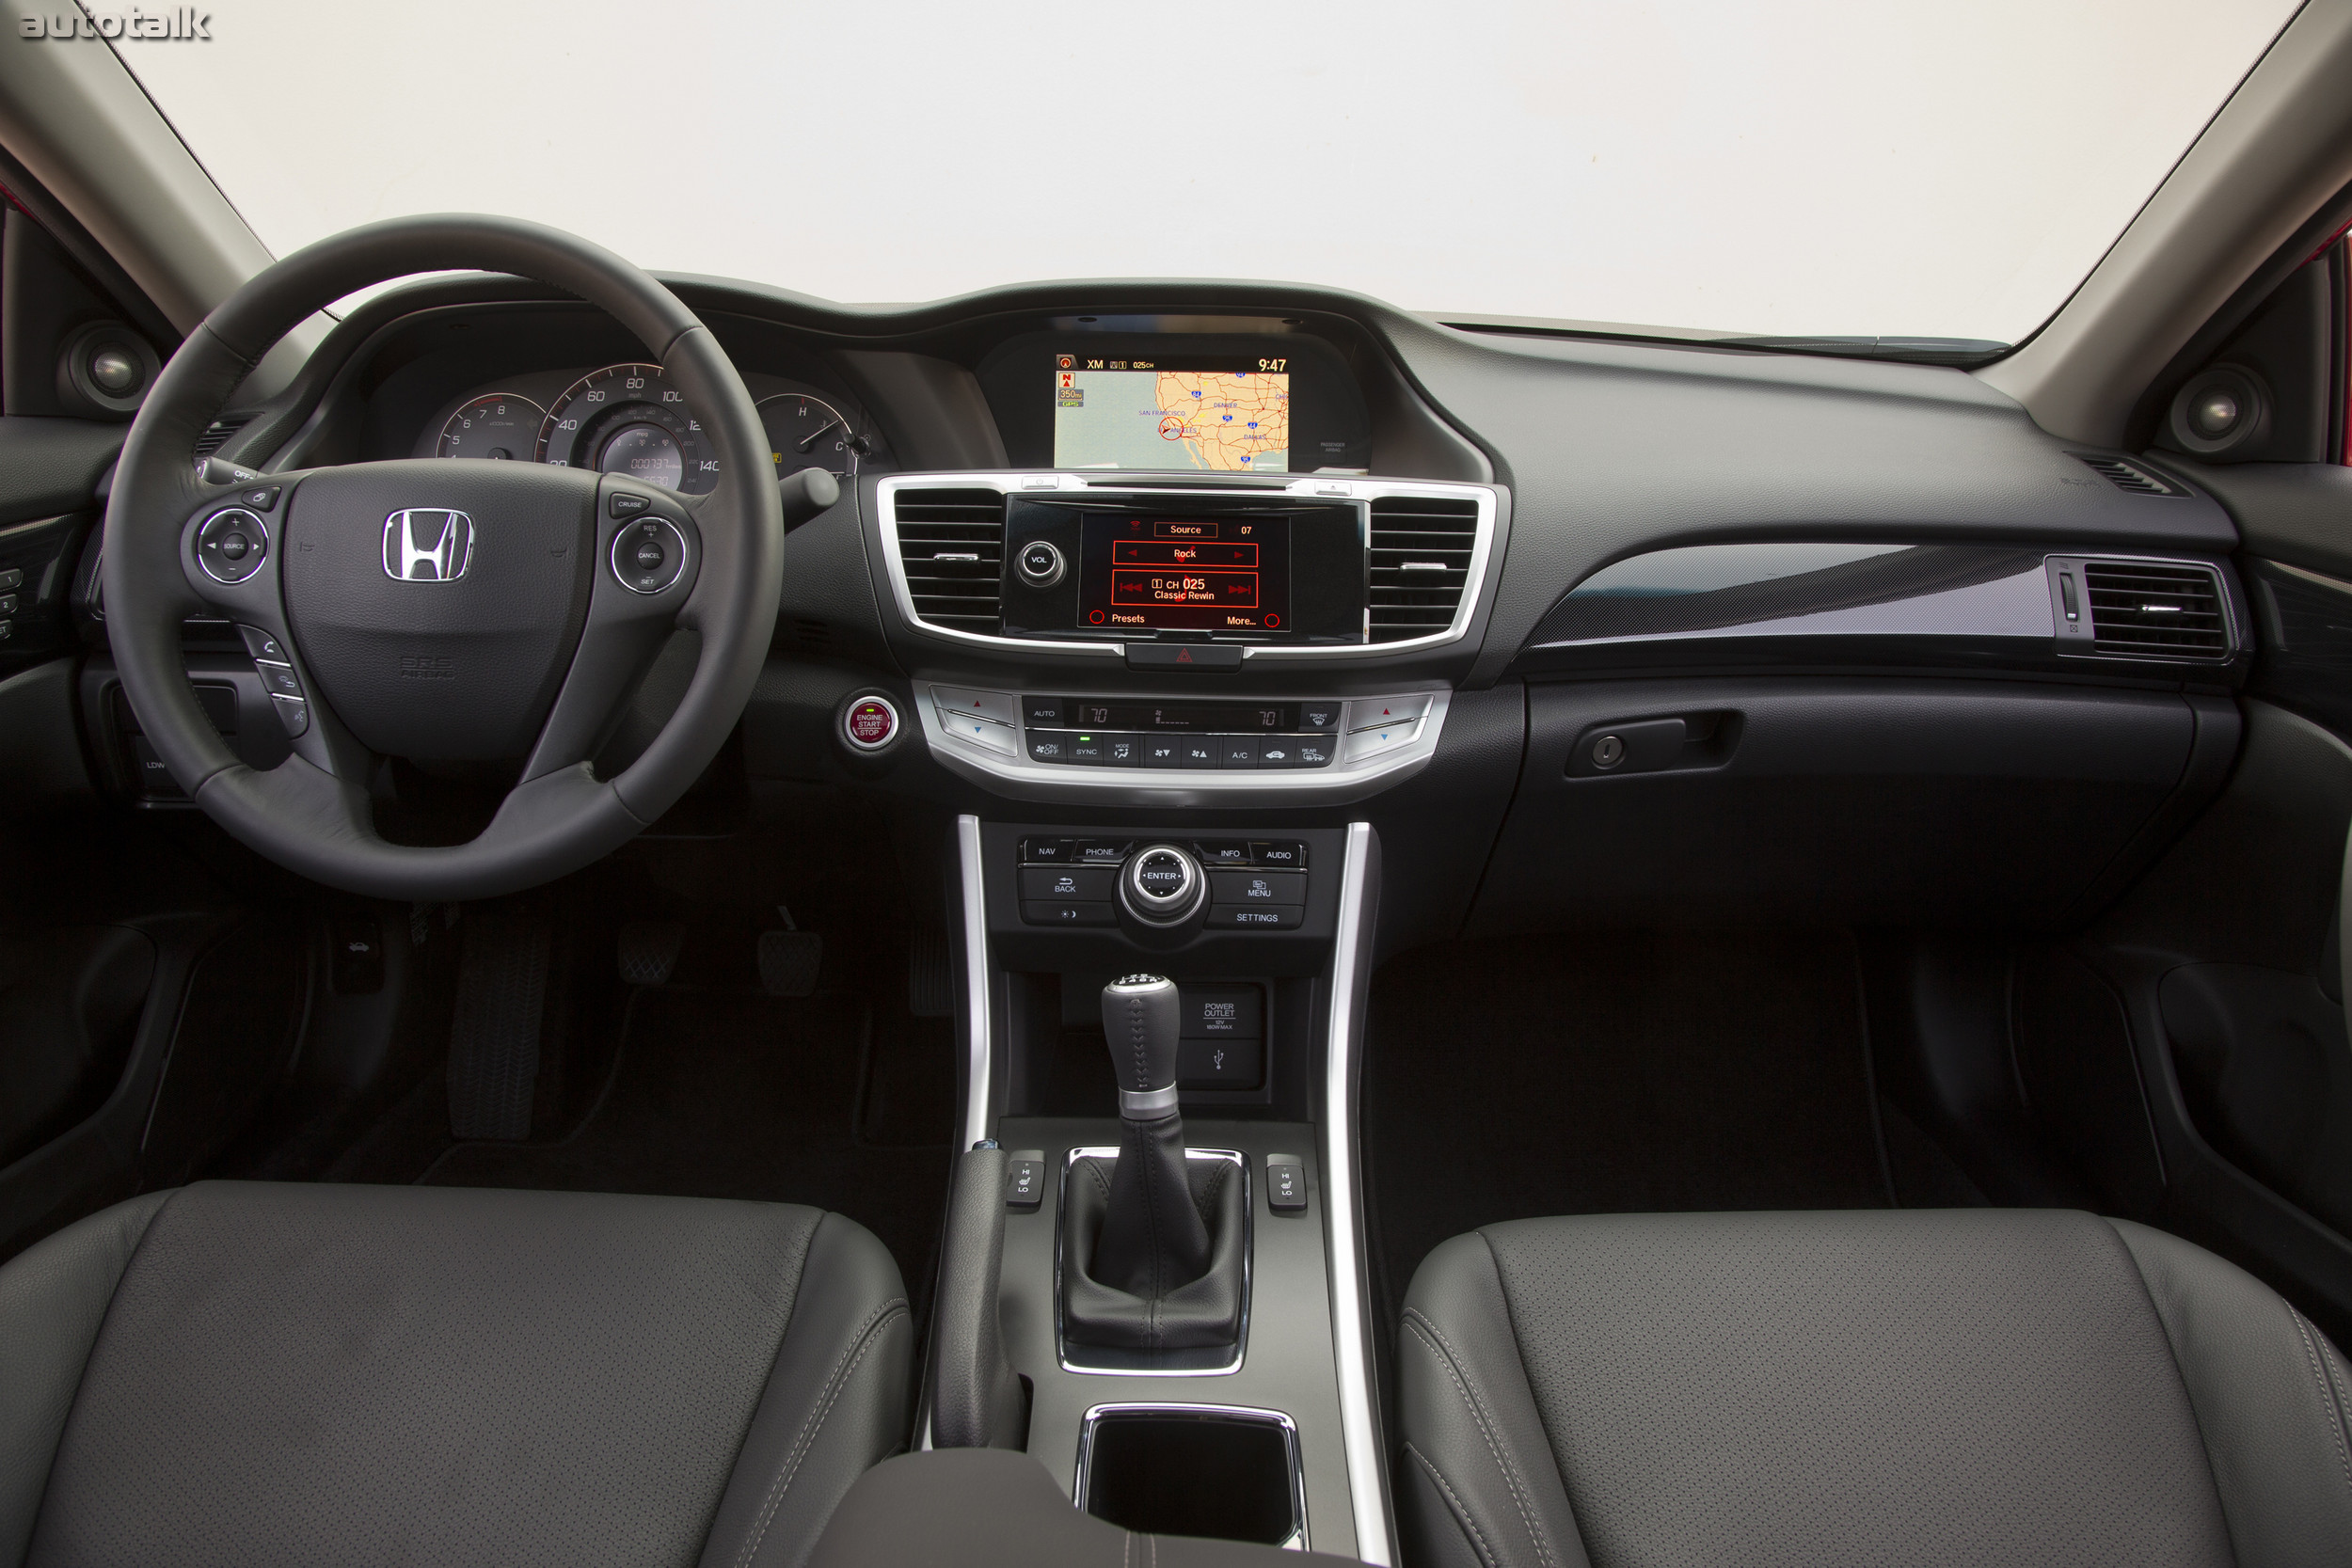 2014 Honda Accord Coupe